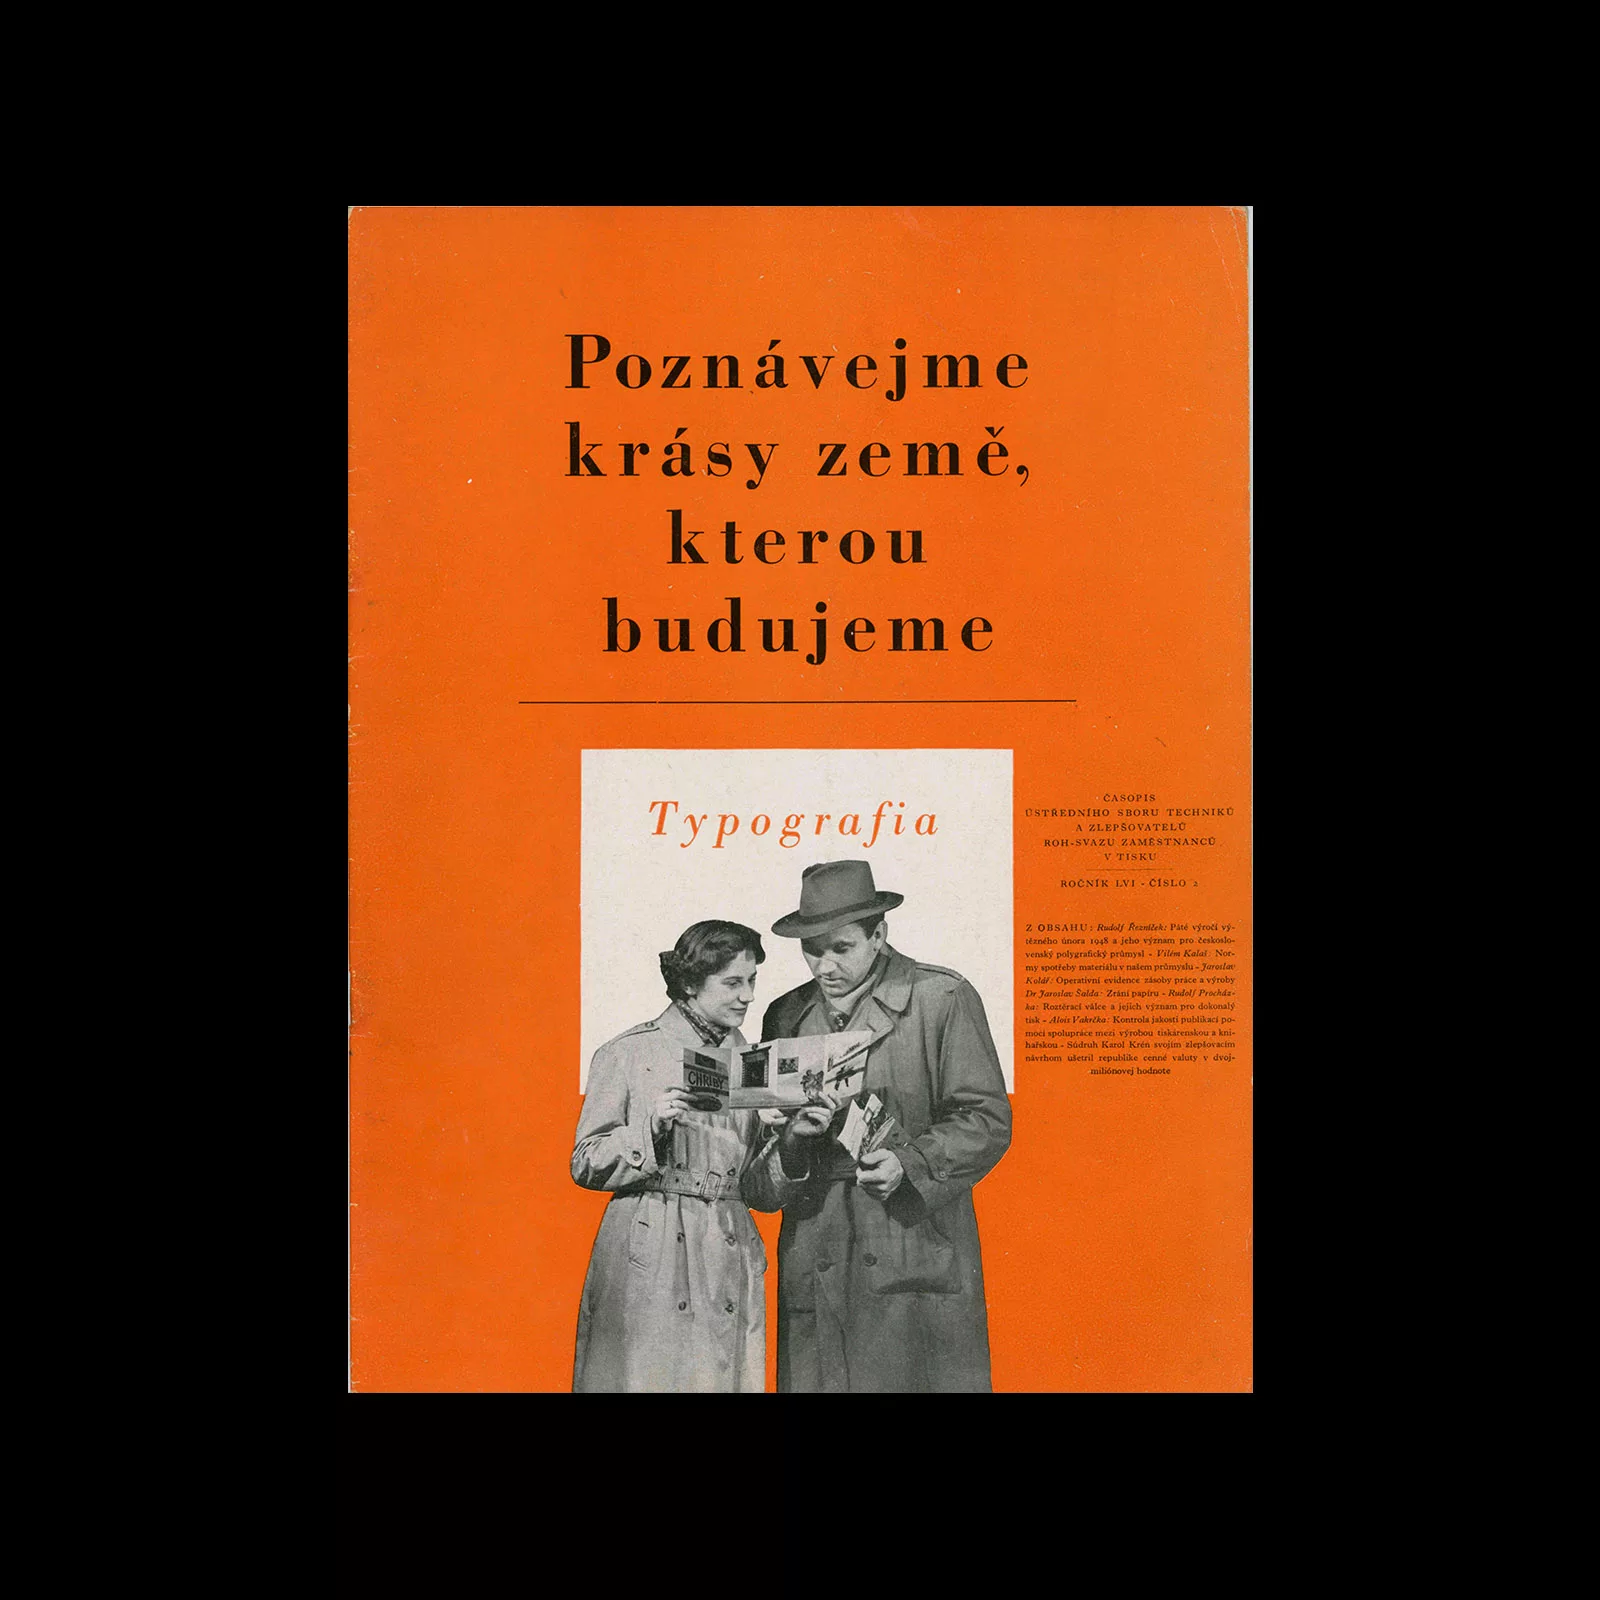 Typografia, ročník 56, 02, 1953. Cover design by Oldřich Hlavsa